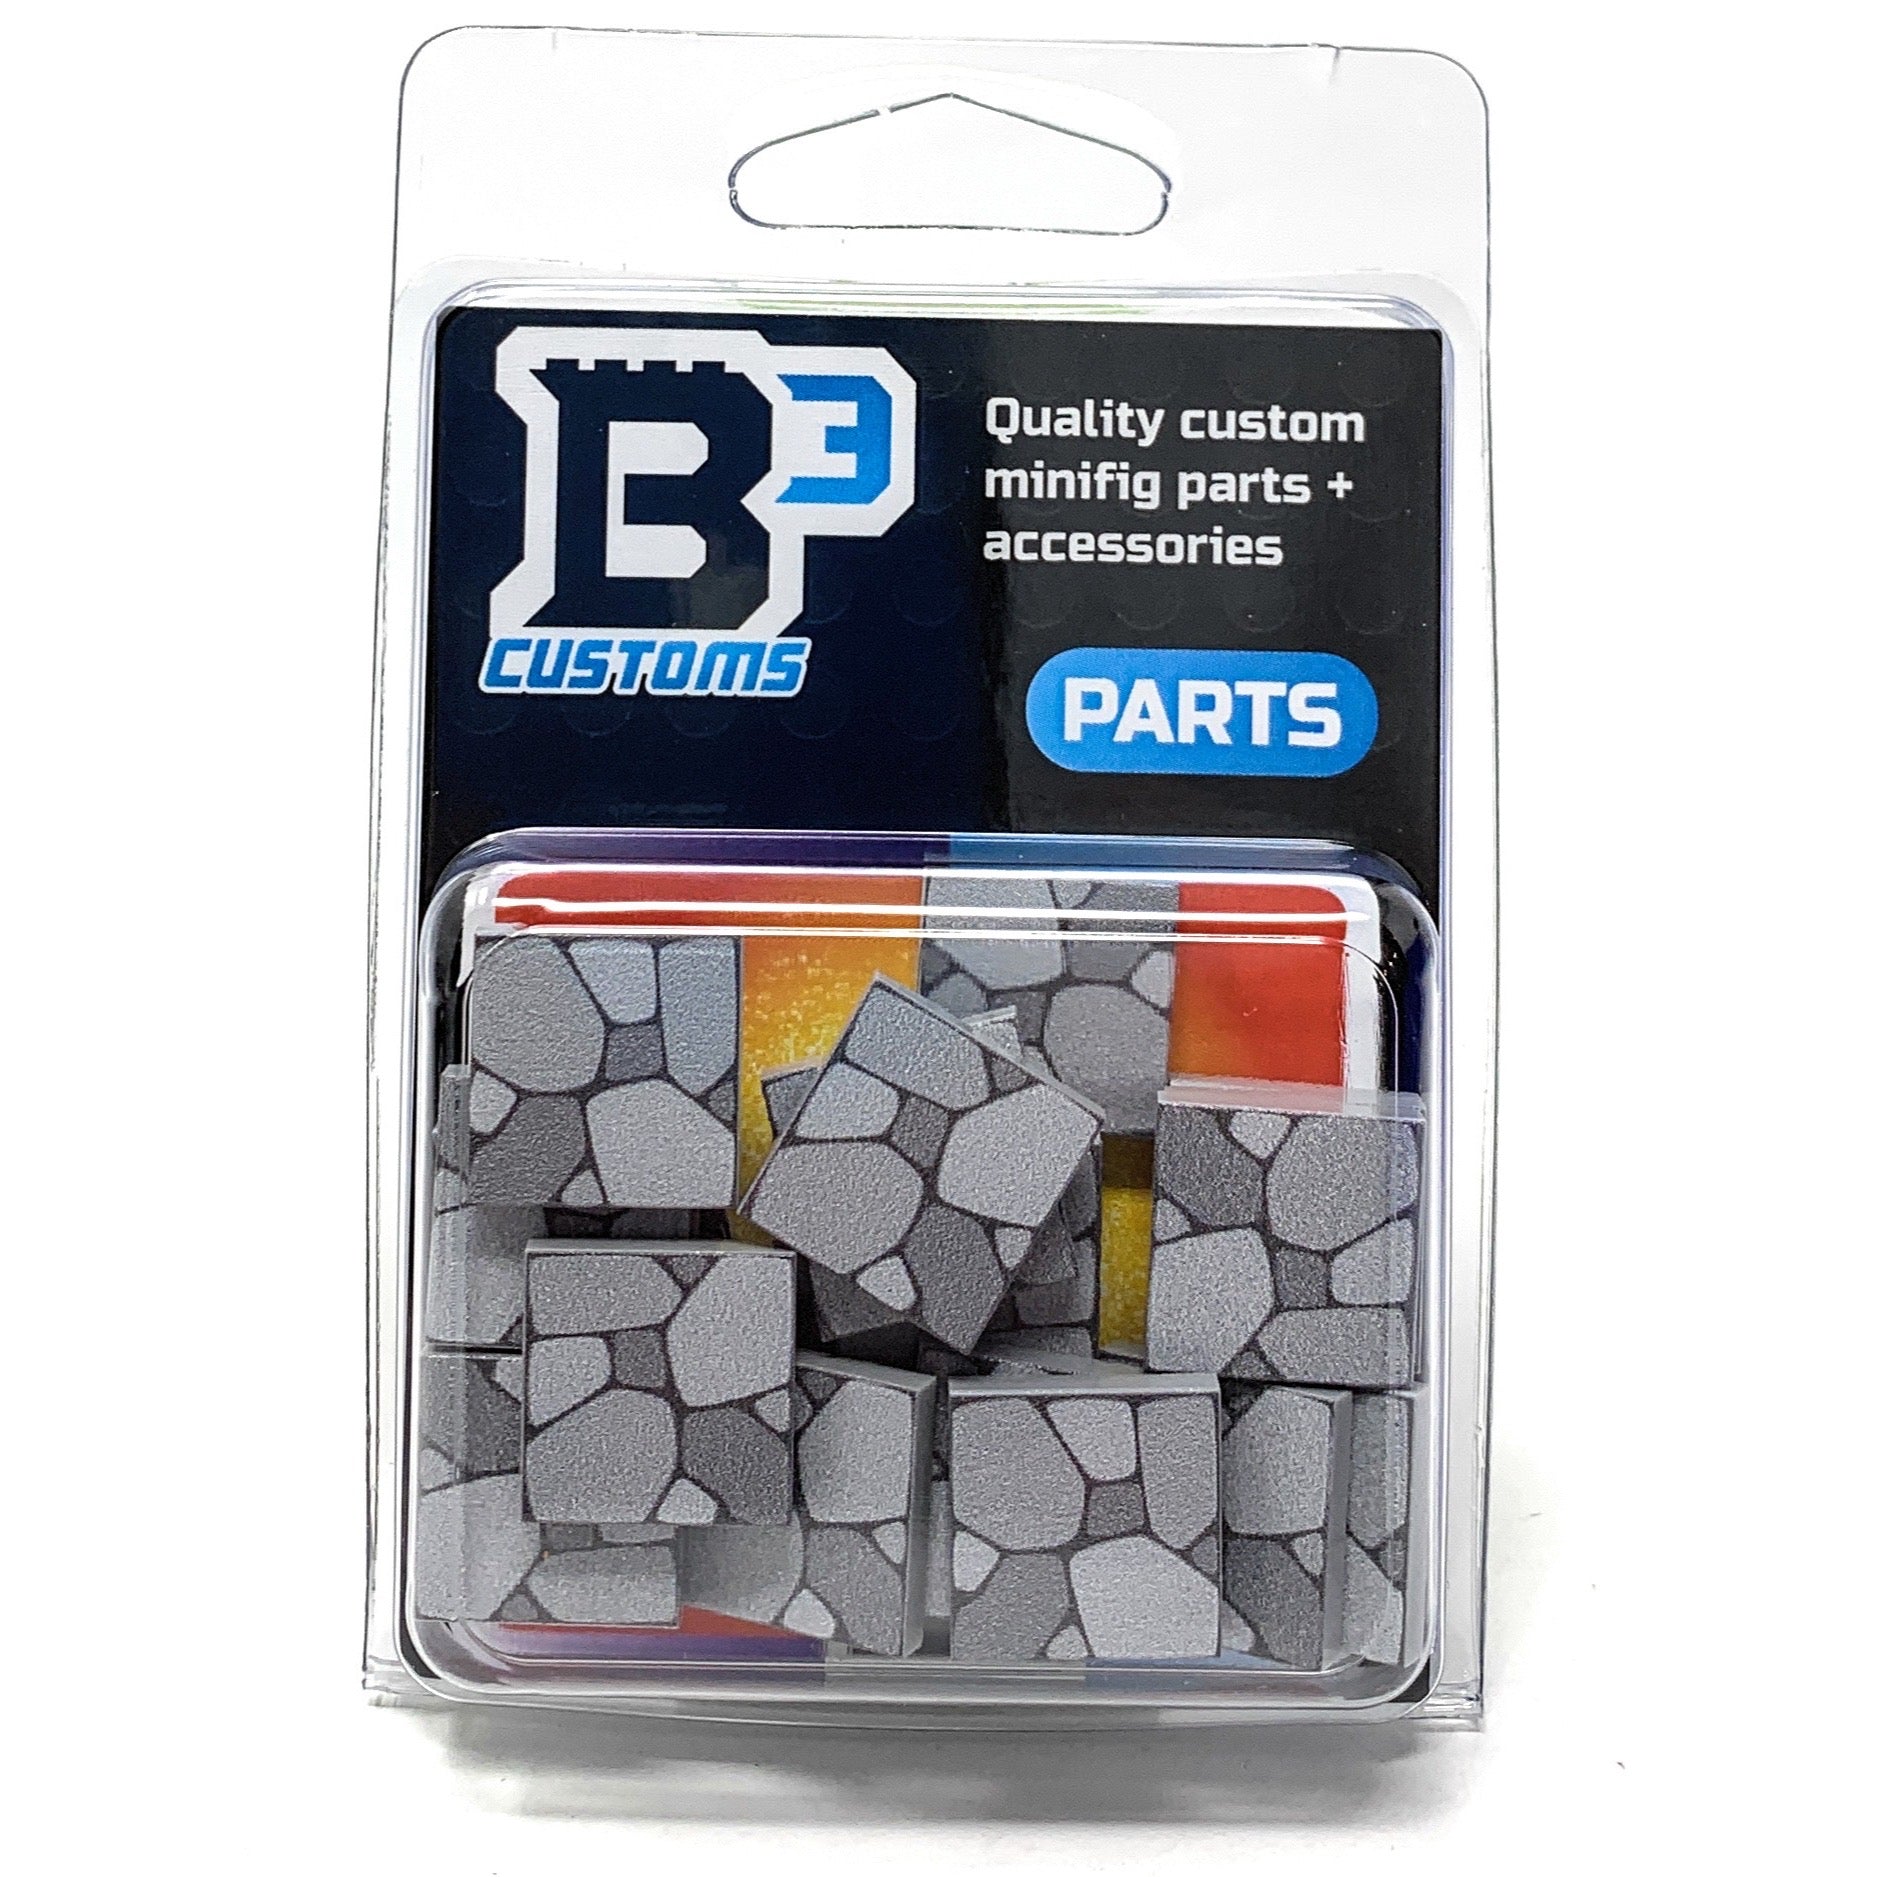 B3 Customs® Cobblestone Tile Part Pack (20 Tiles)